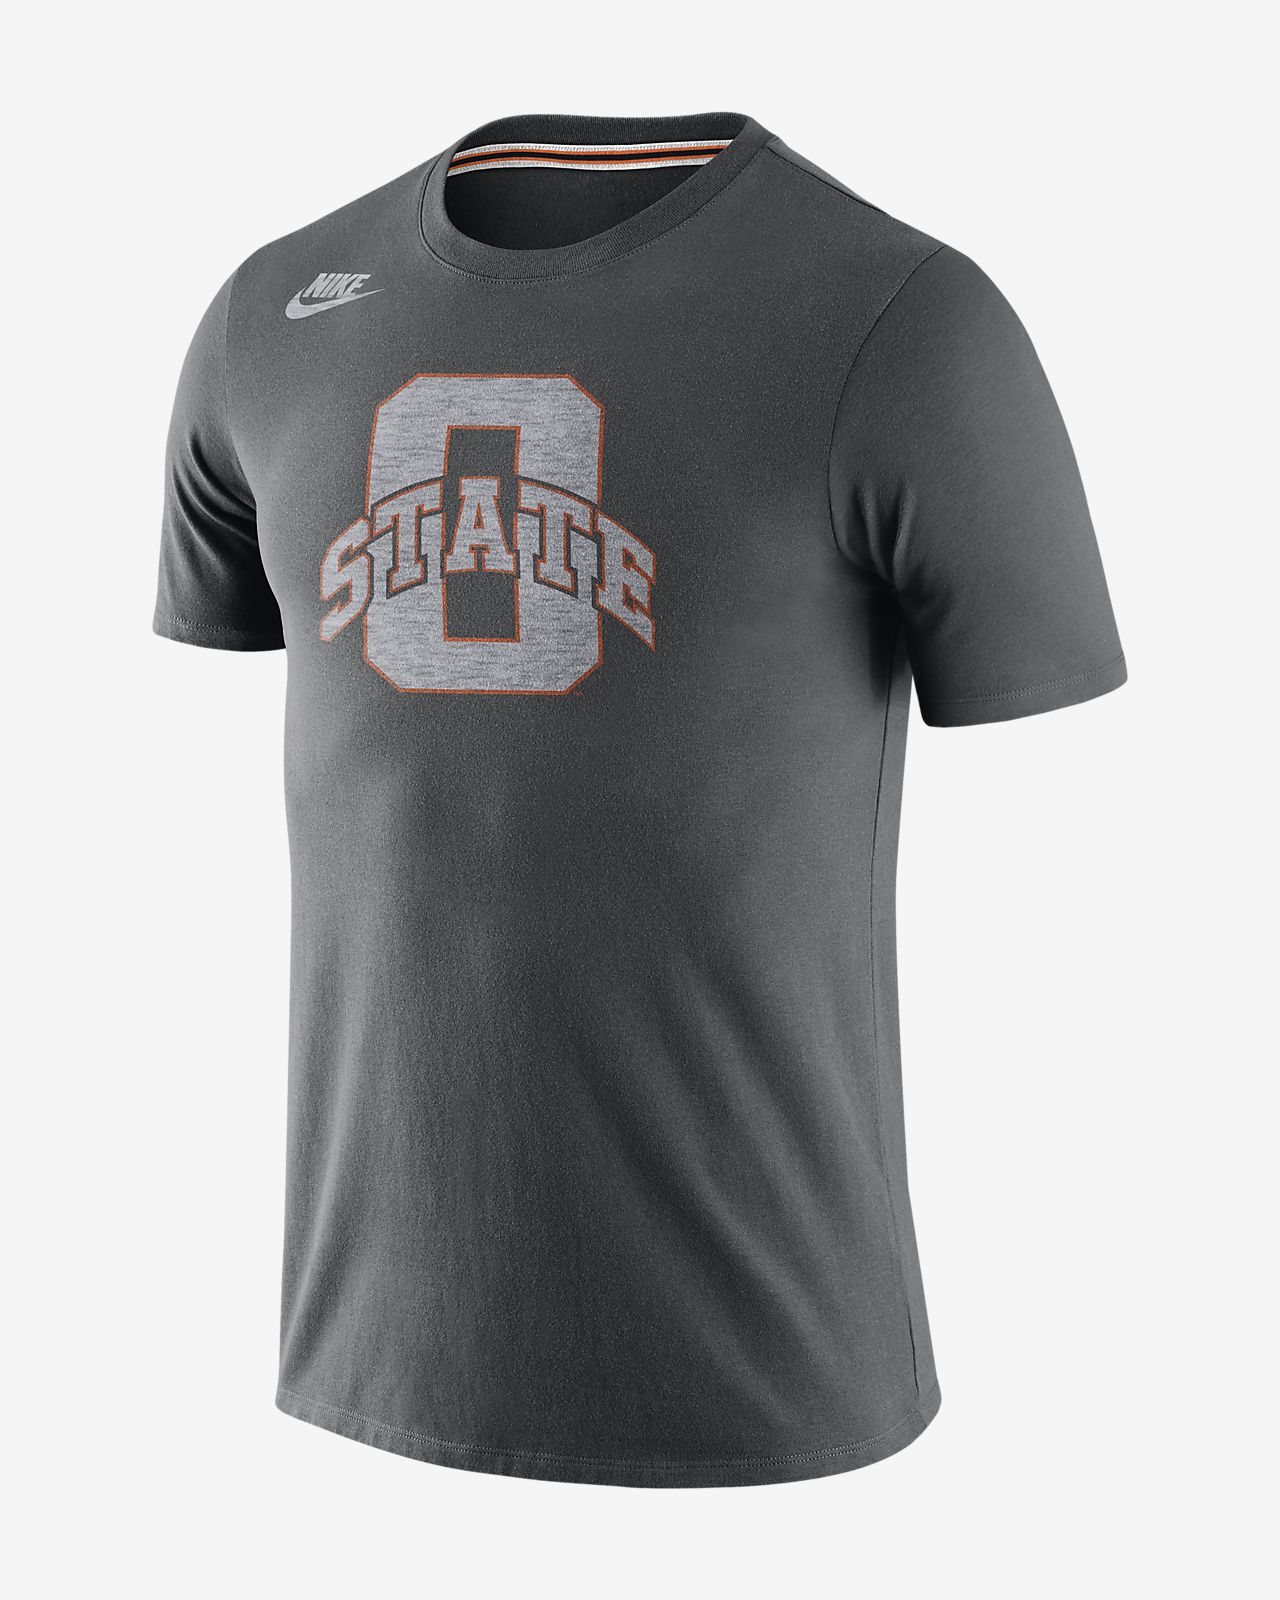 Nike College Retro (Ohio State) Men's T-Shirt. Nike.com